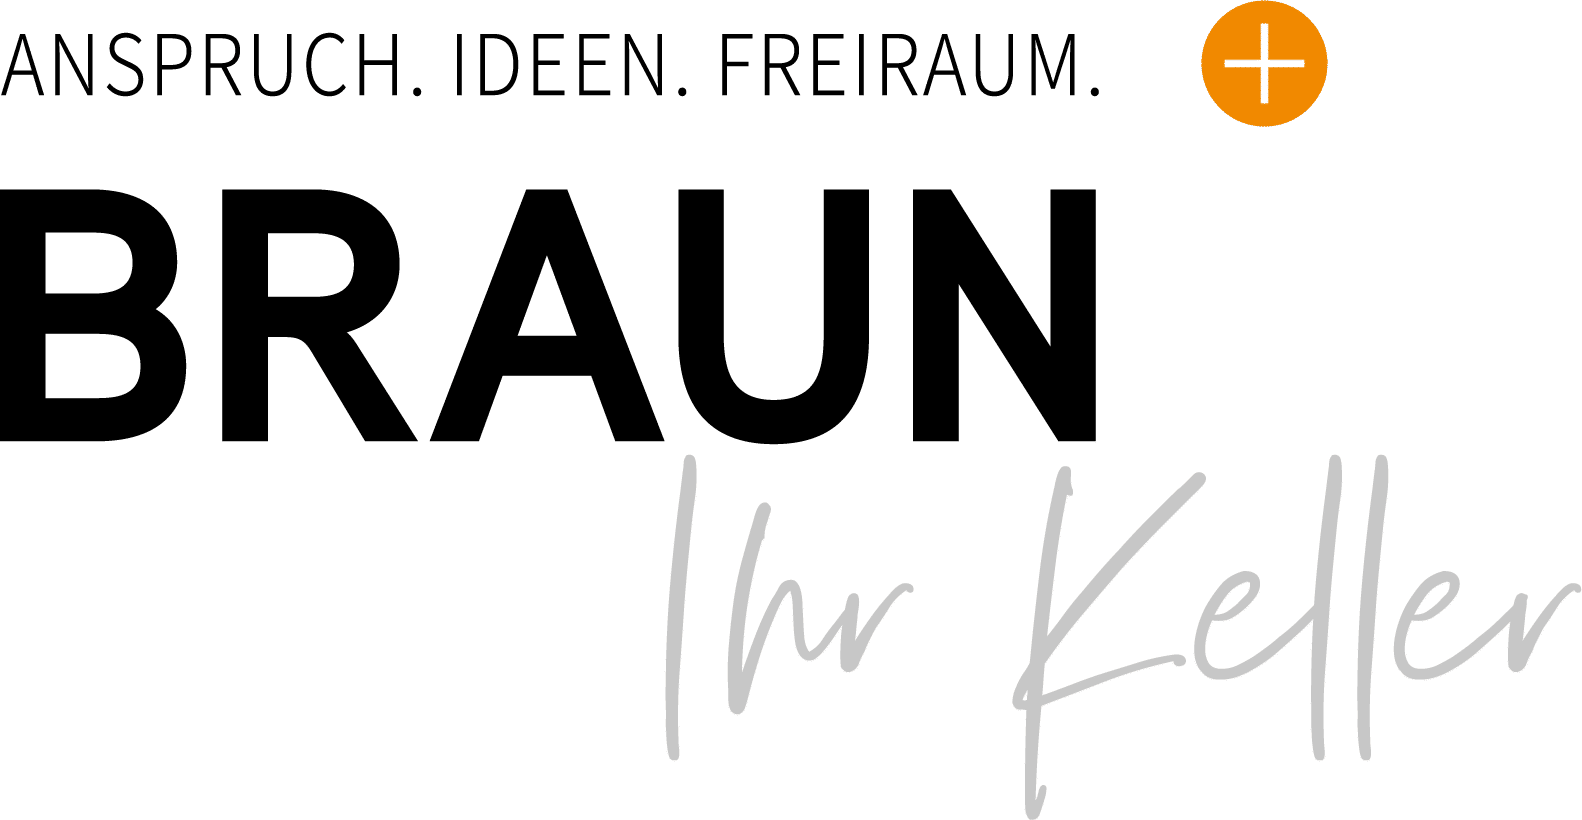 Braun Keller